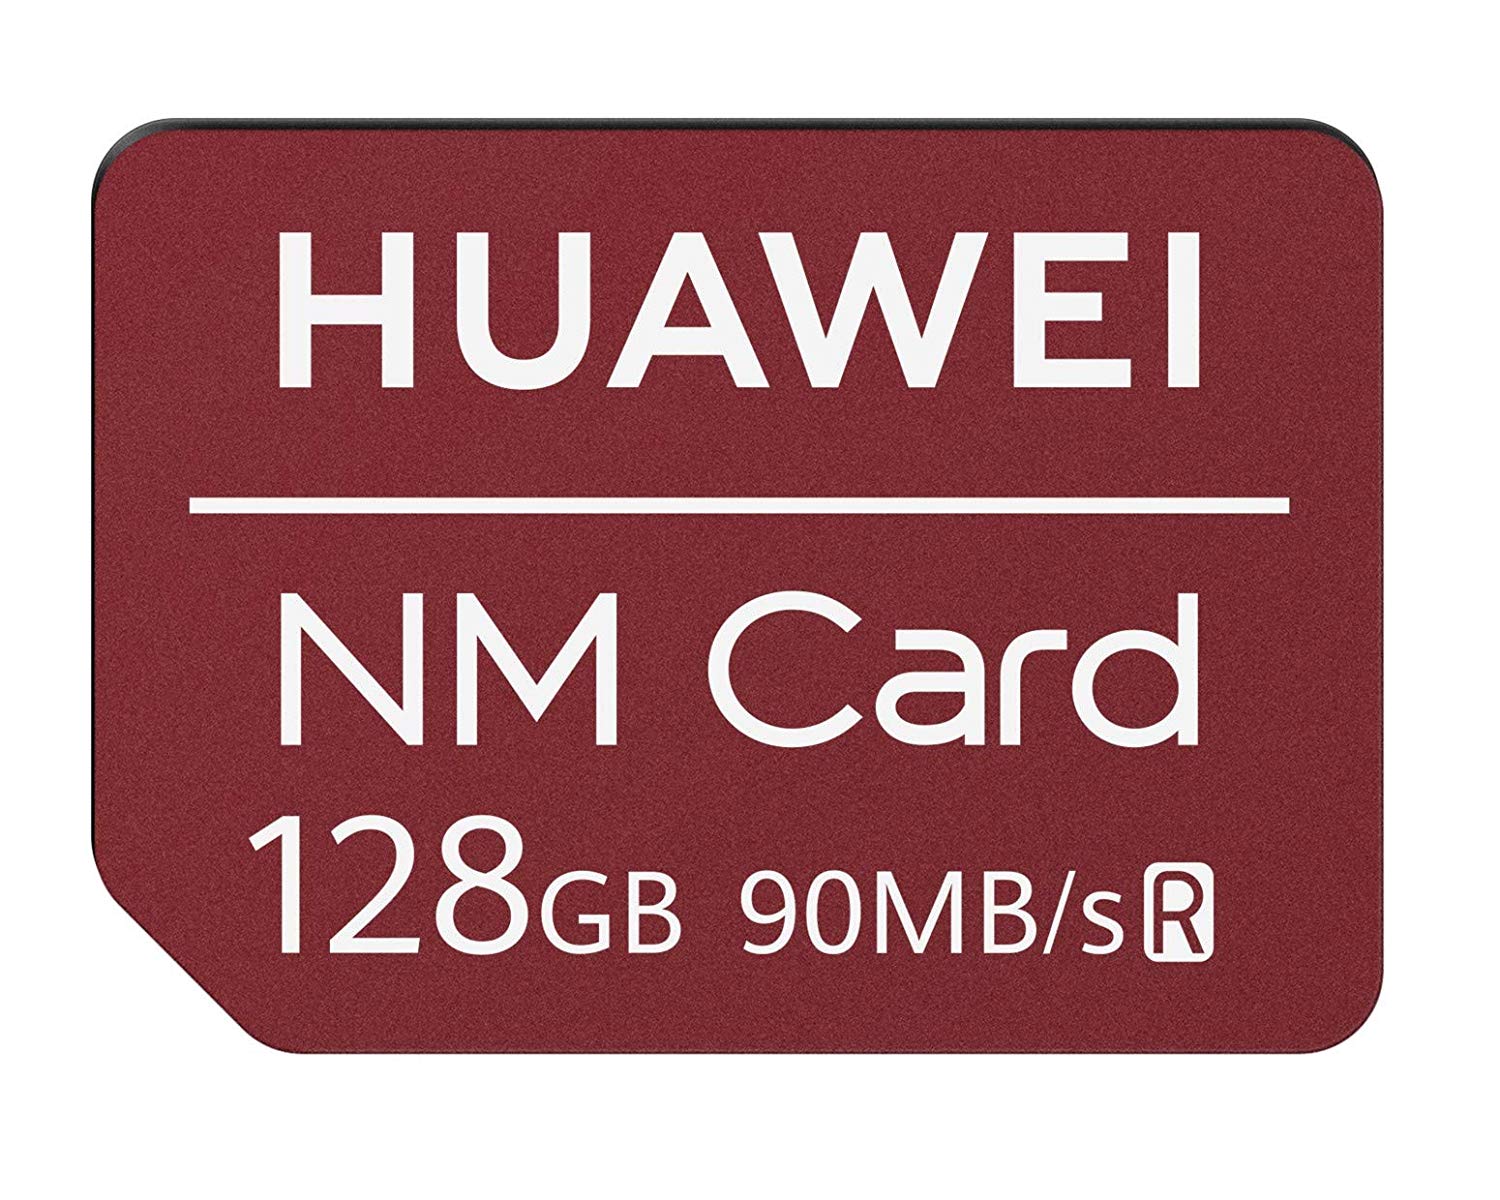 Huawei ファーウェイ 純正 NM Card 128GB 【並行輸入品】メモリーカード メモリー カード お買い物マラソン 楽天ランキング第1位 送料無料 送料込 (Nano Memory Card 128GB) Huawei Mate 20, Mate 20 Pro, Mate 20 RS, Mate 20 X 対応　p30 p20 対応